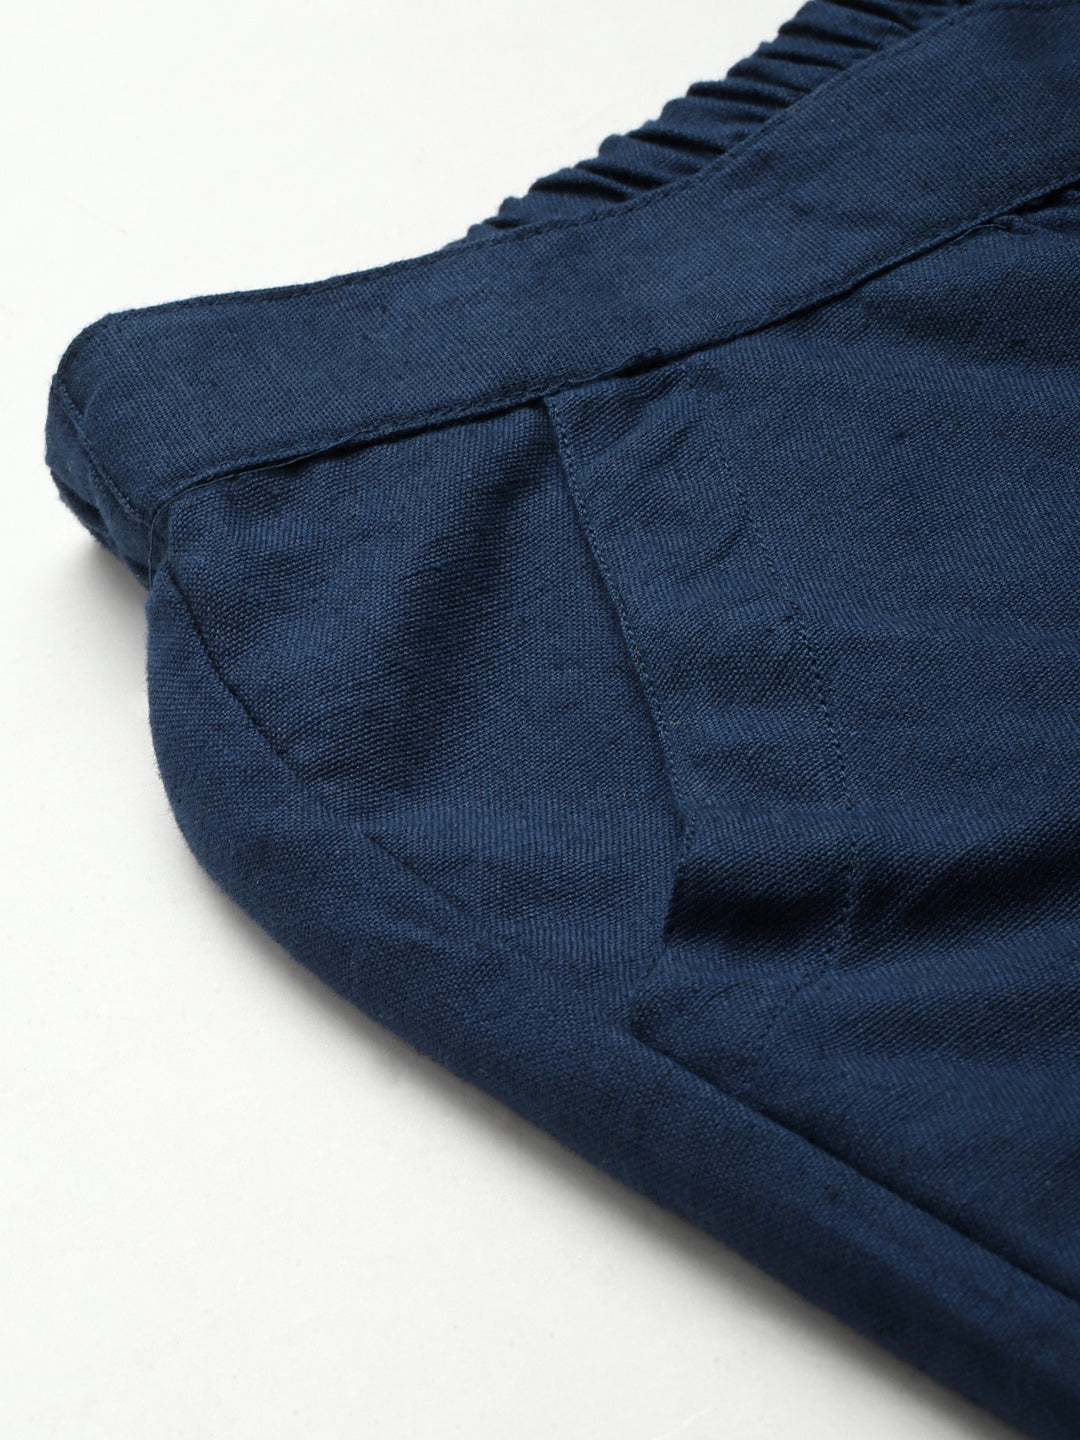 Trouser linen for mens with regular fit | Quality brand Europann